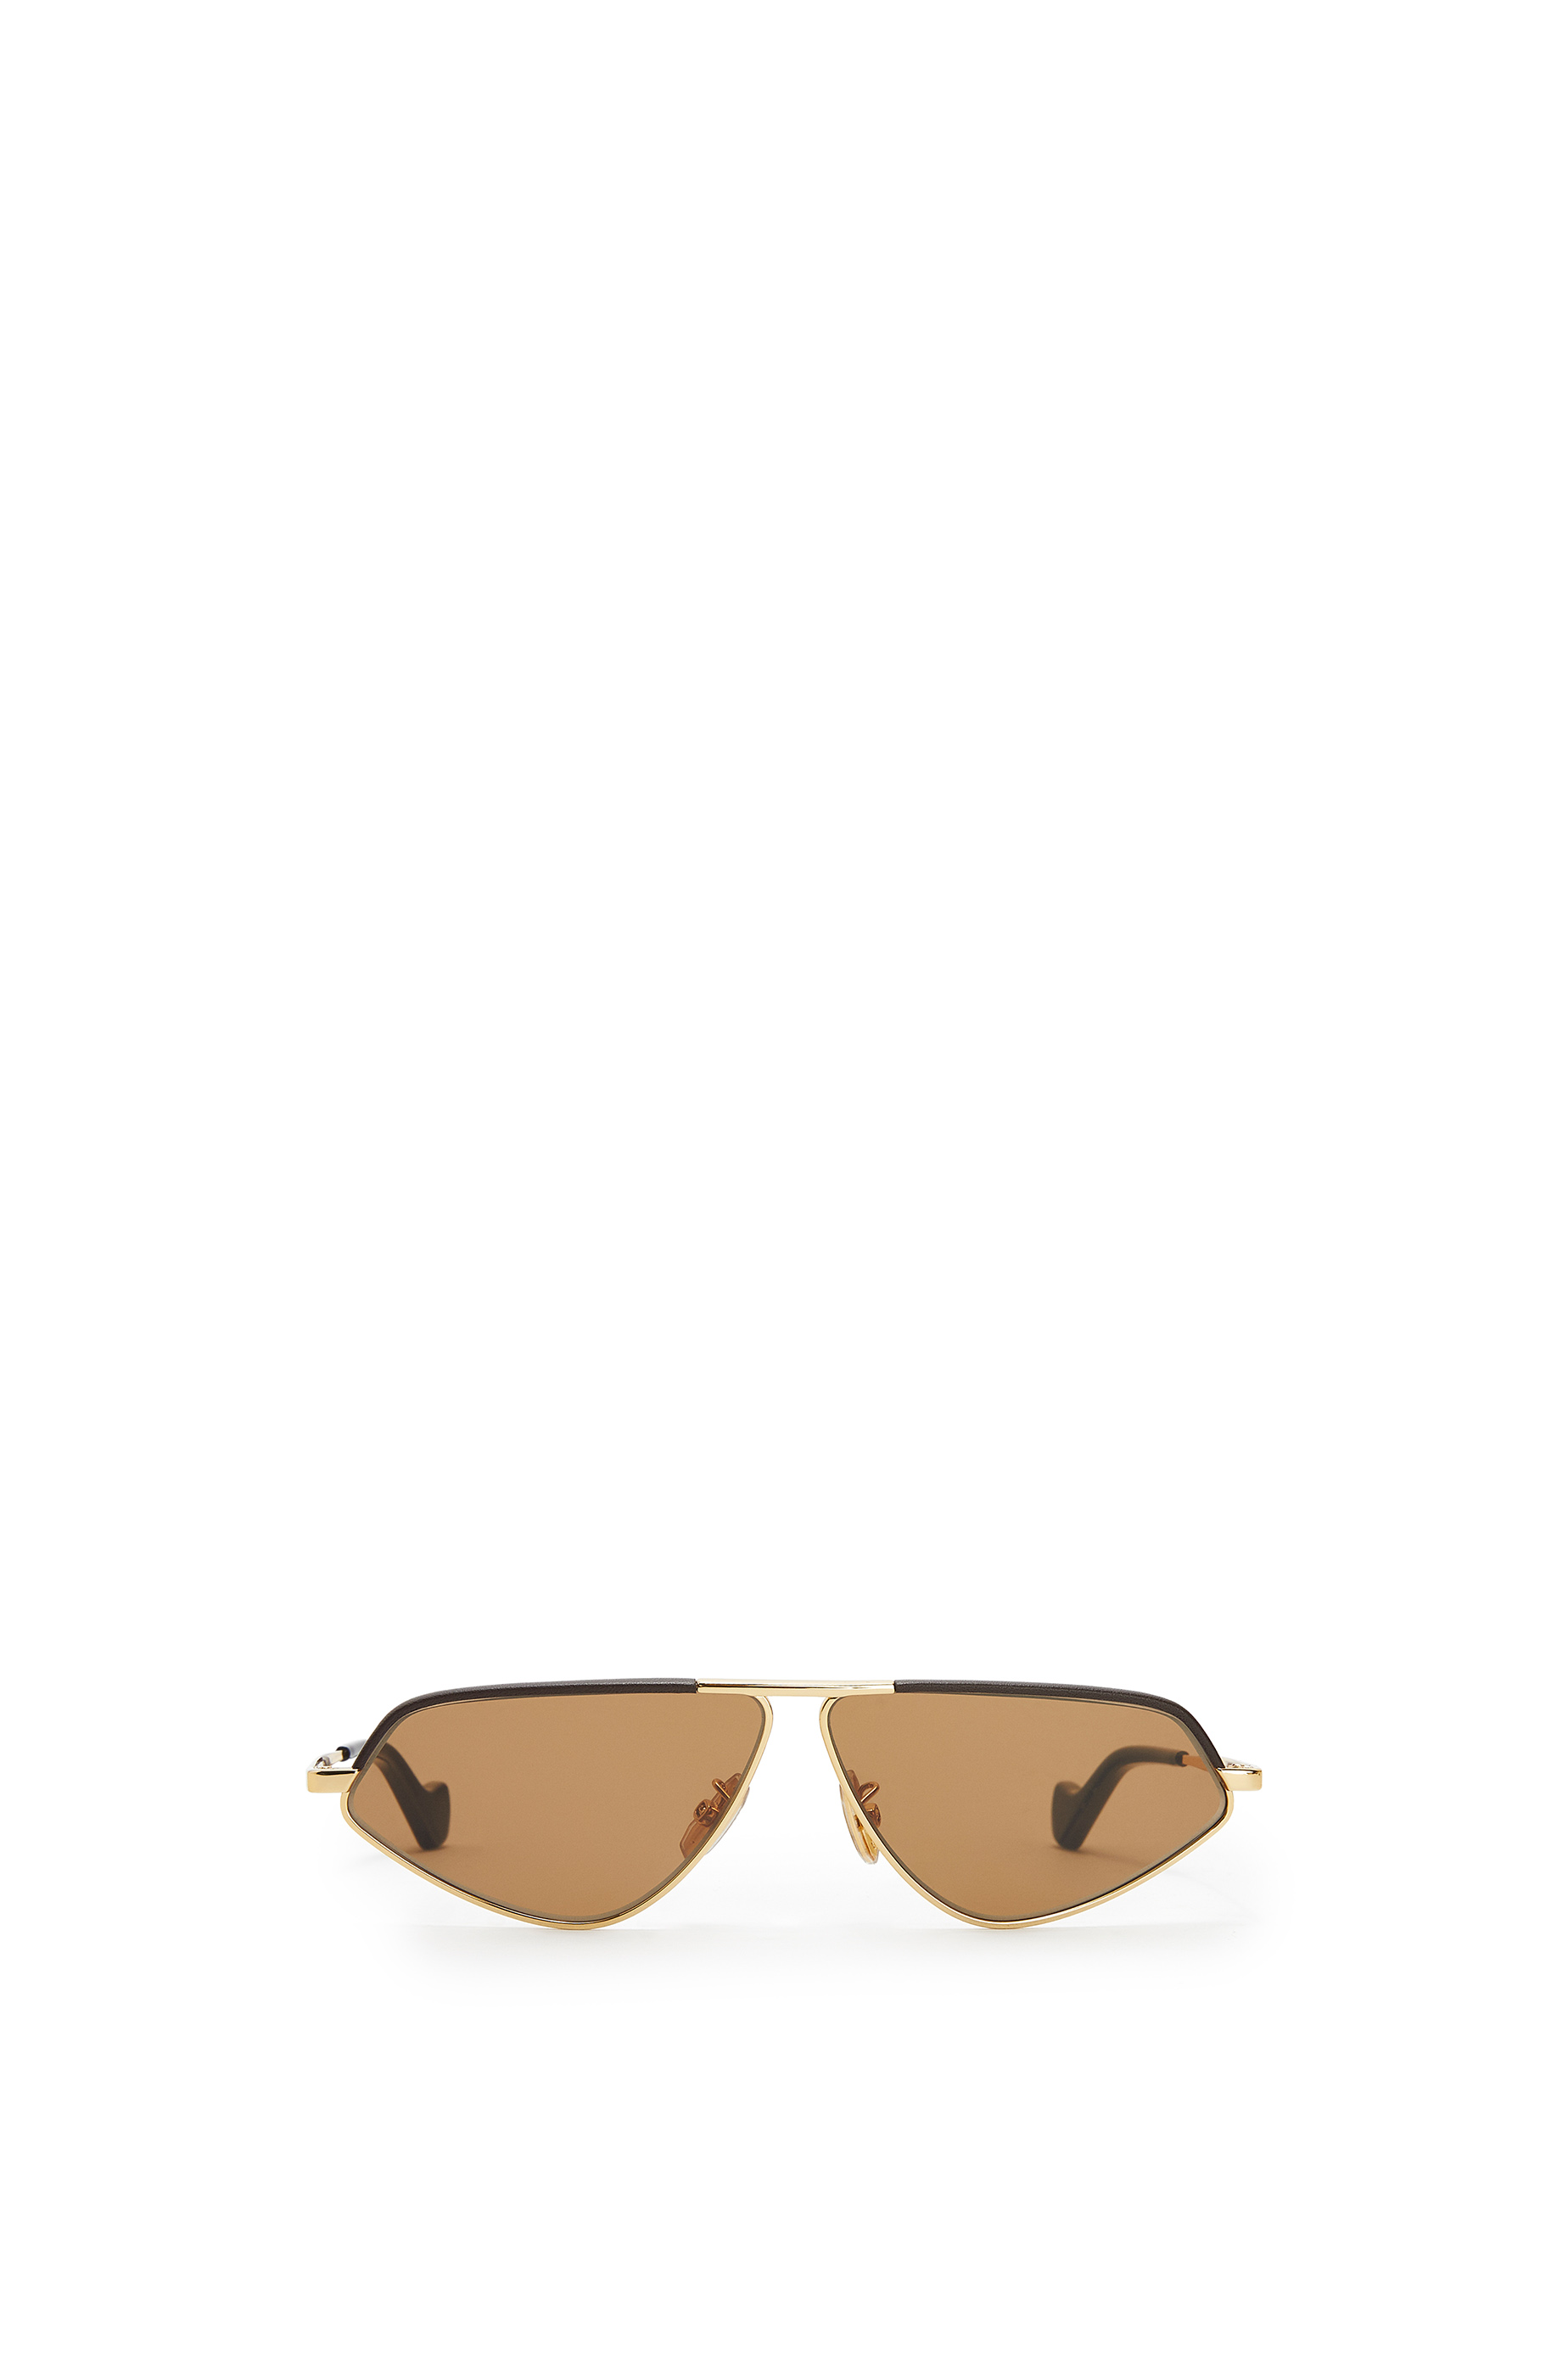 loewe sunglasses price